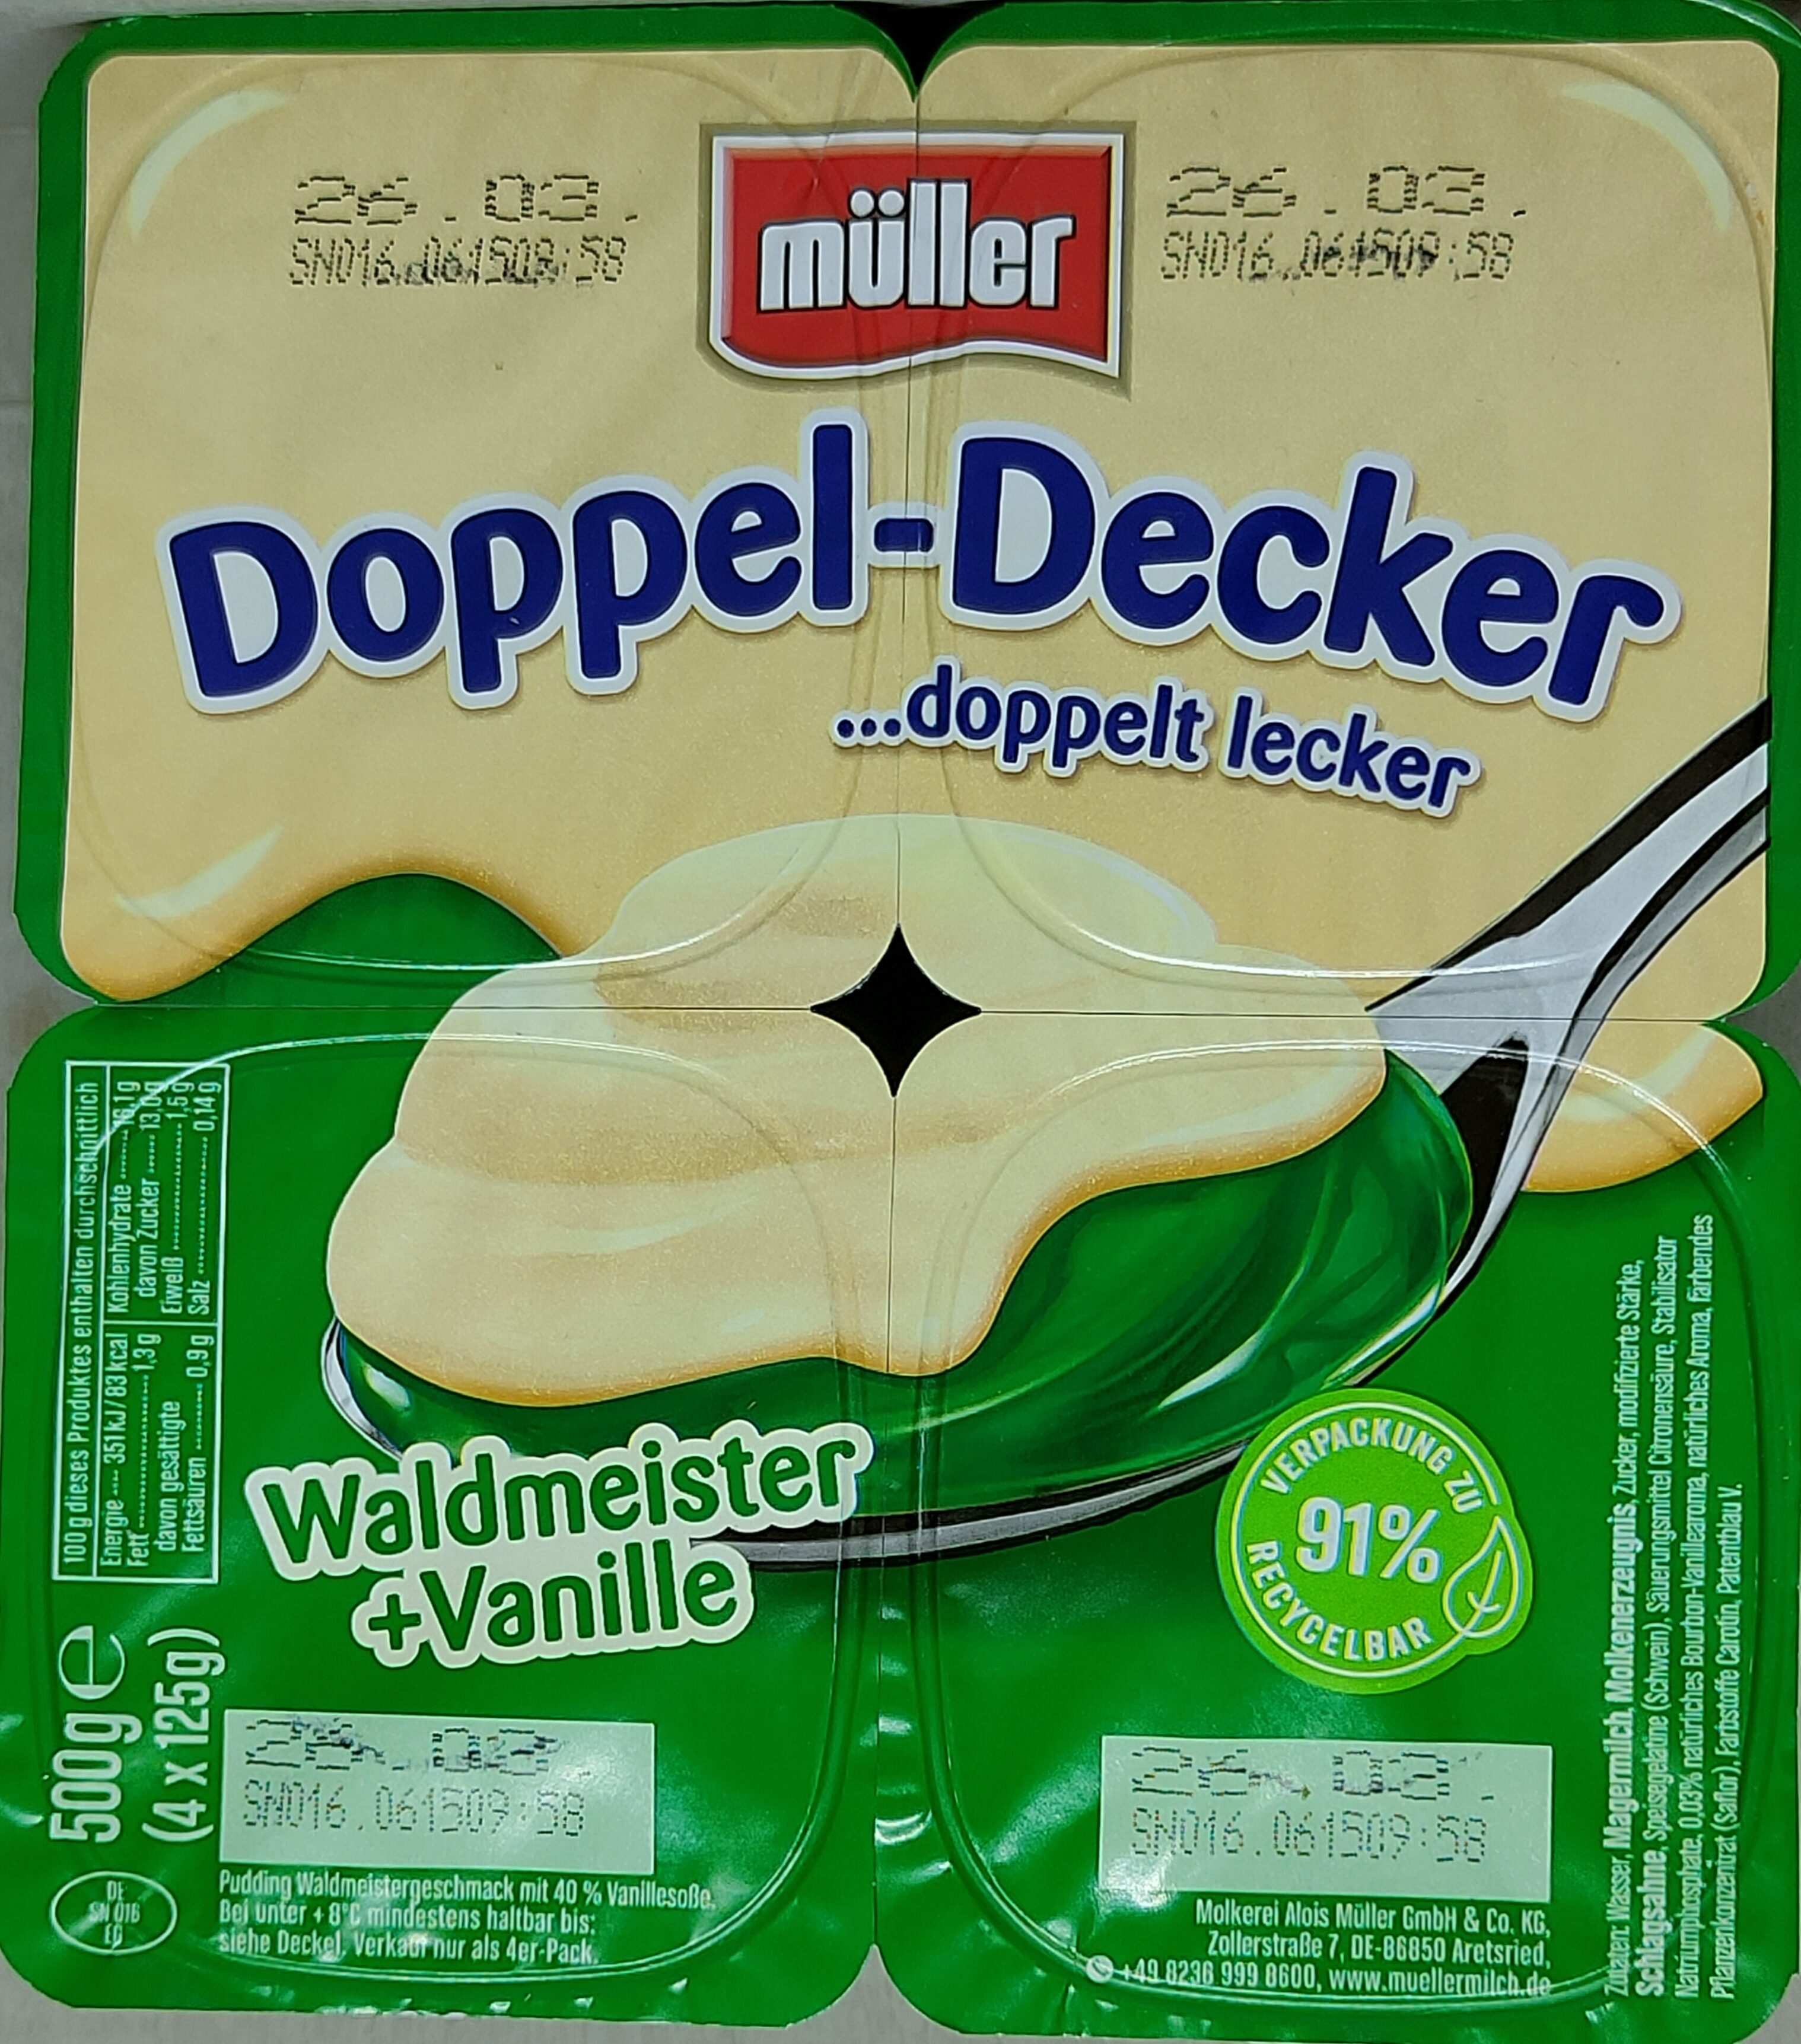 Doppeldecker - Waldmeister + Vanille - Produit - de